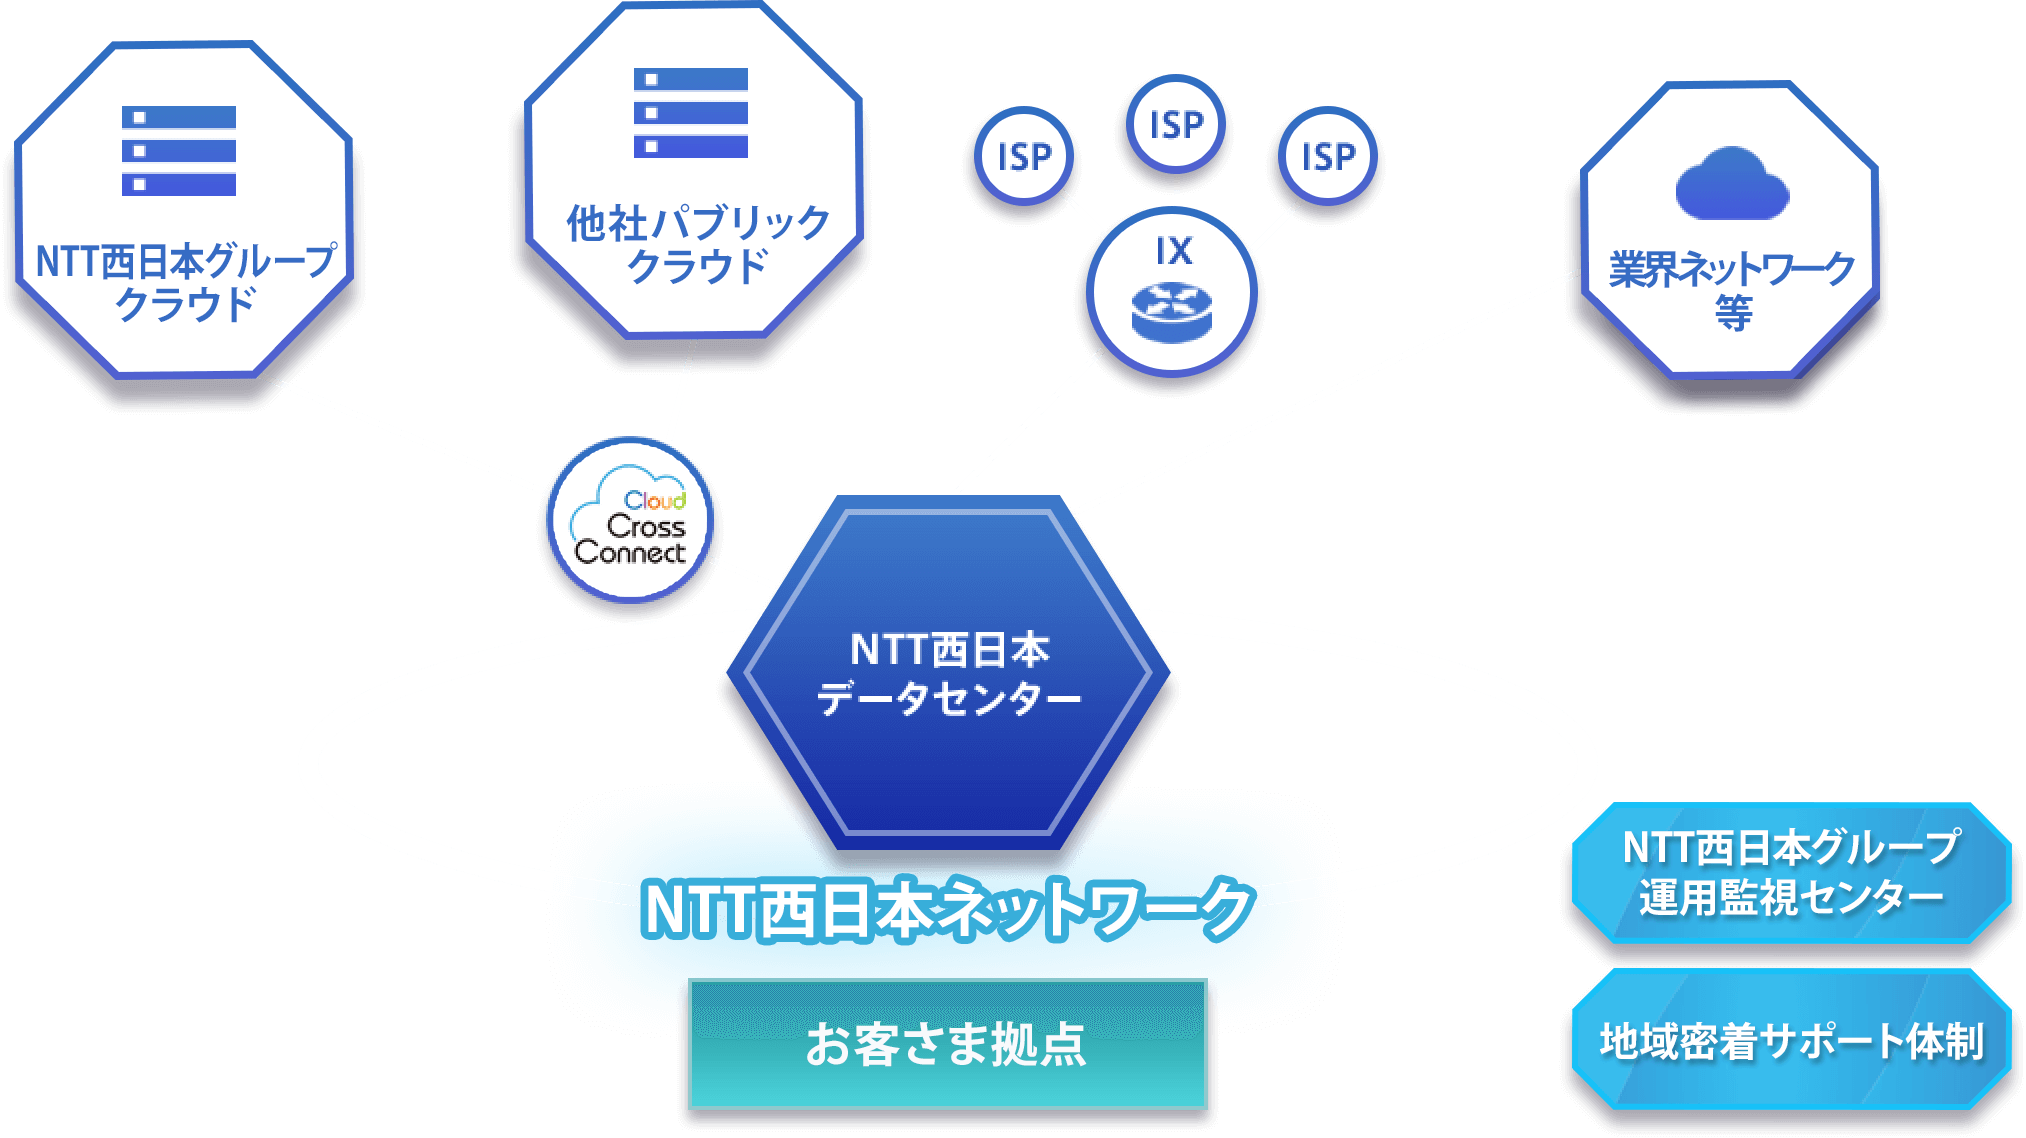 NTT西日本ネットワーク